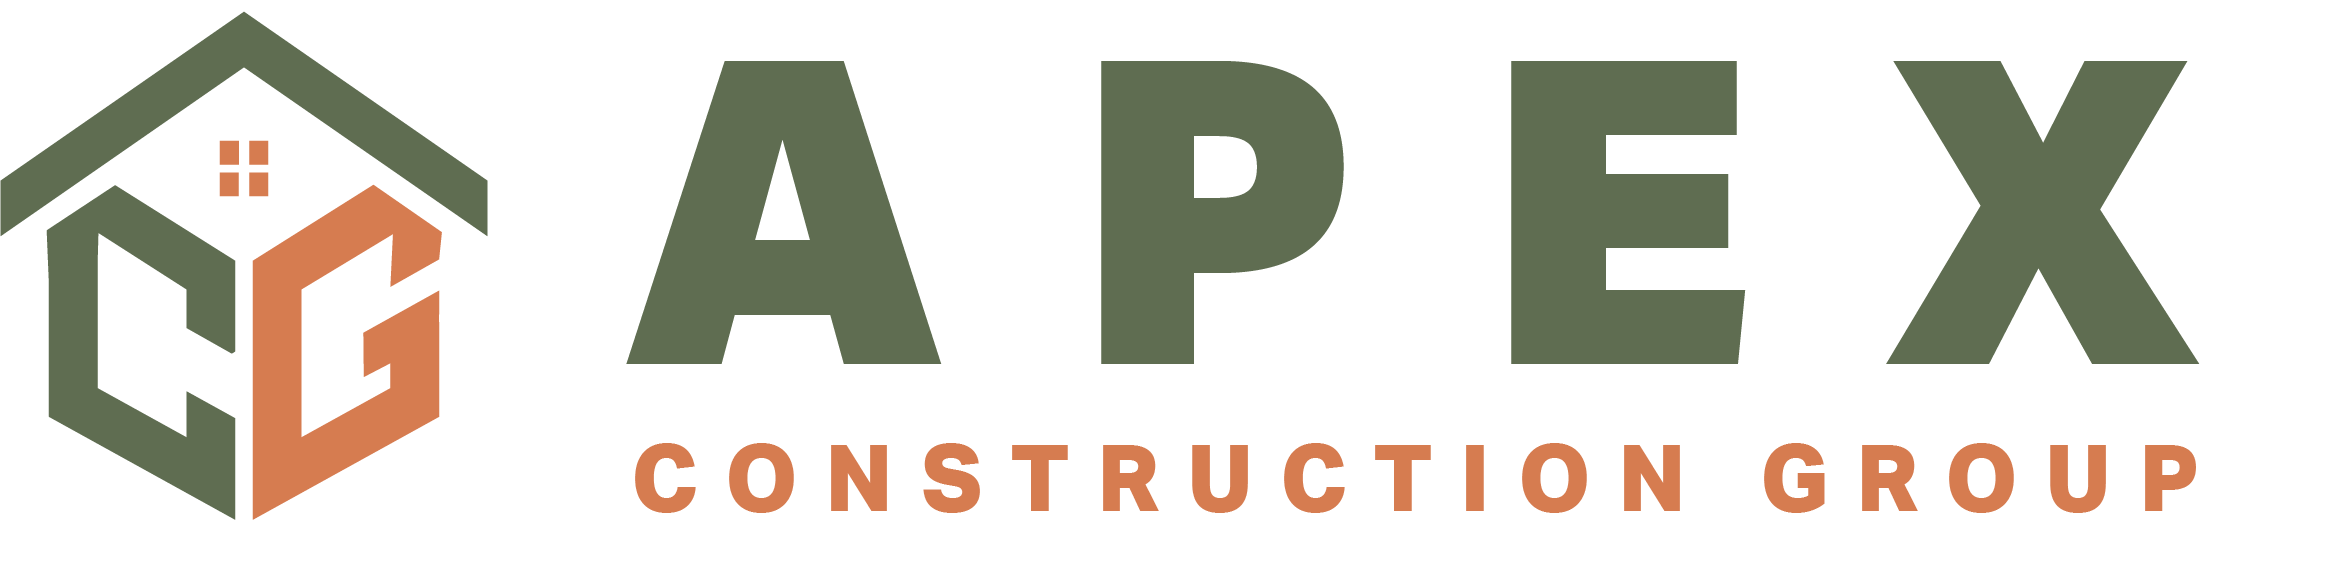 Apex Construction Group